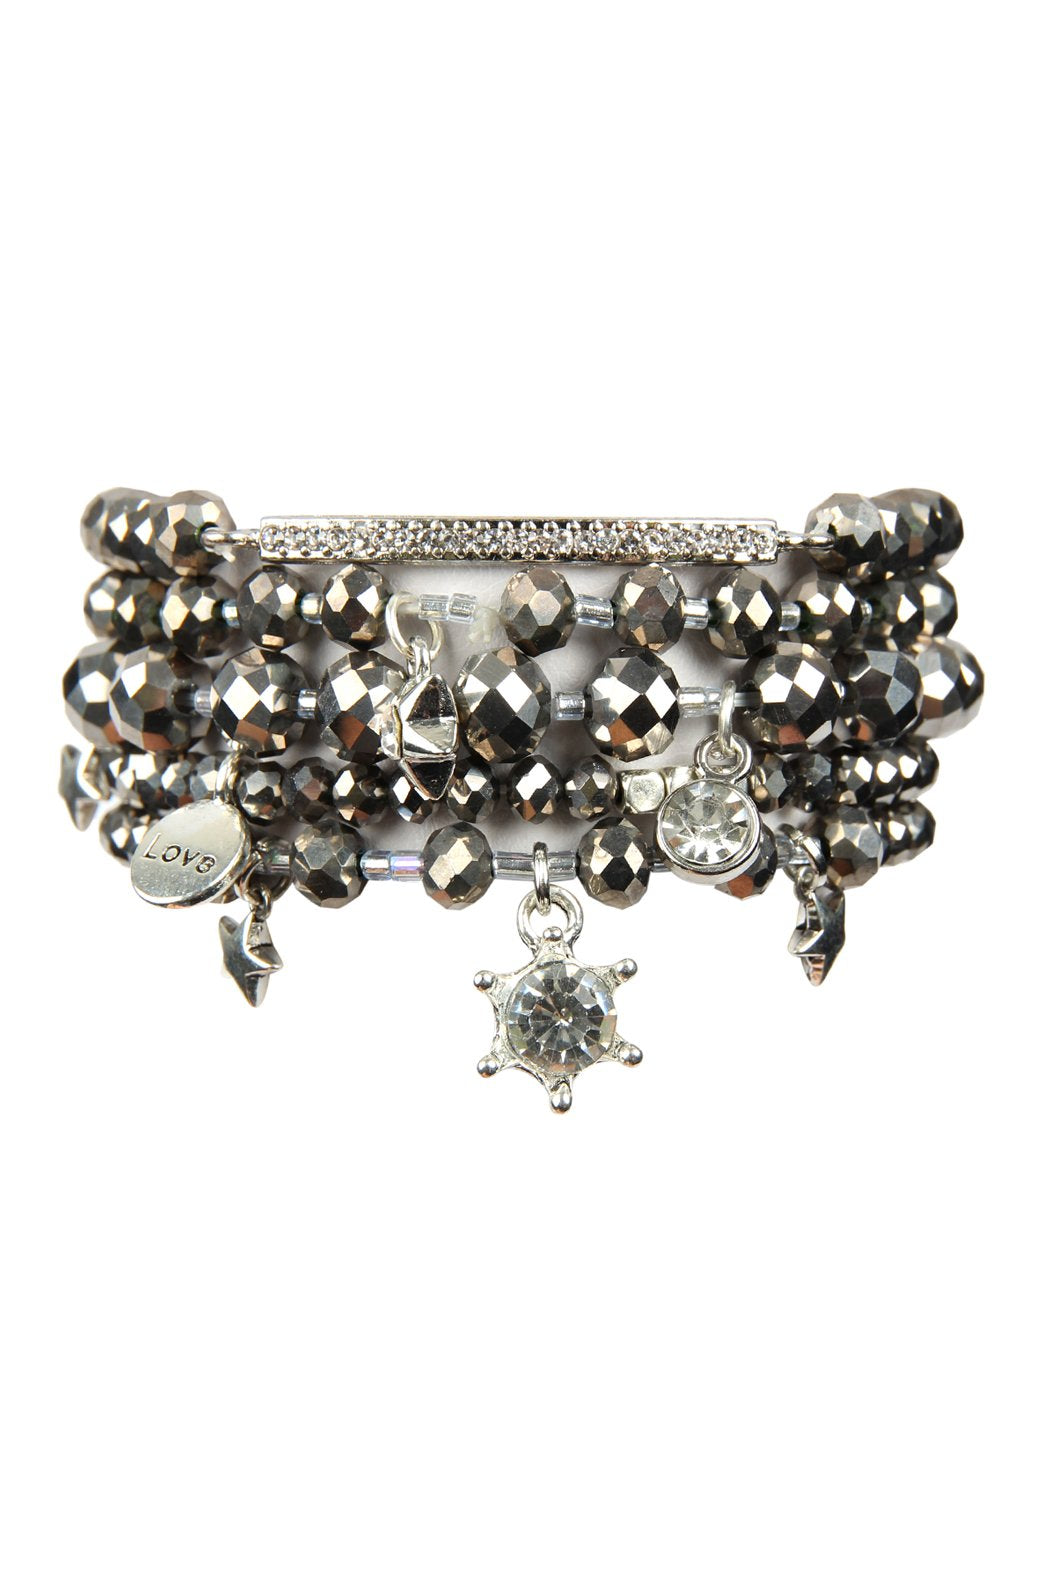 Hdb2540b - Glass Beads Charm Bracelet Set